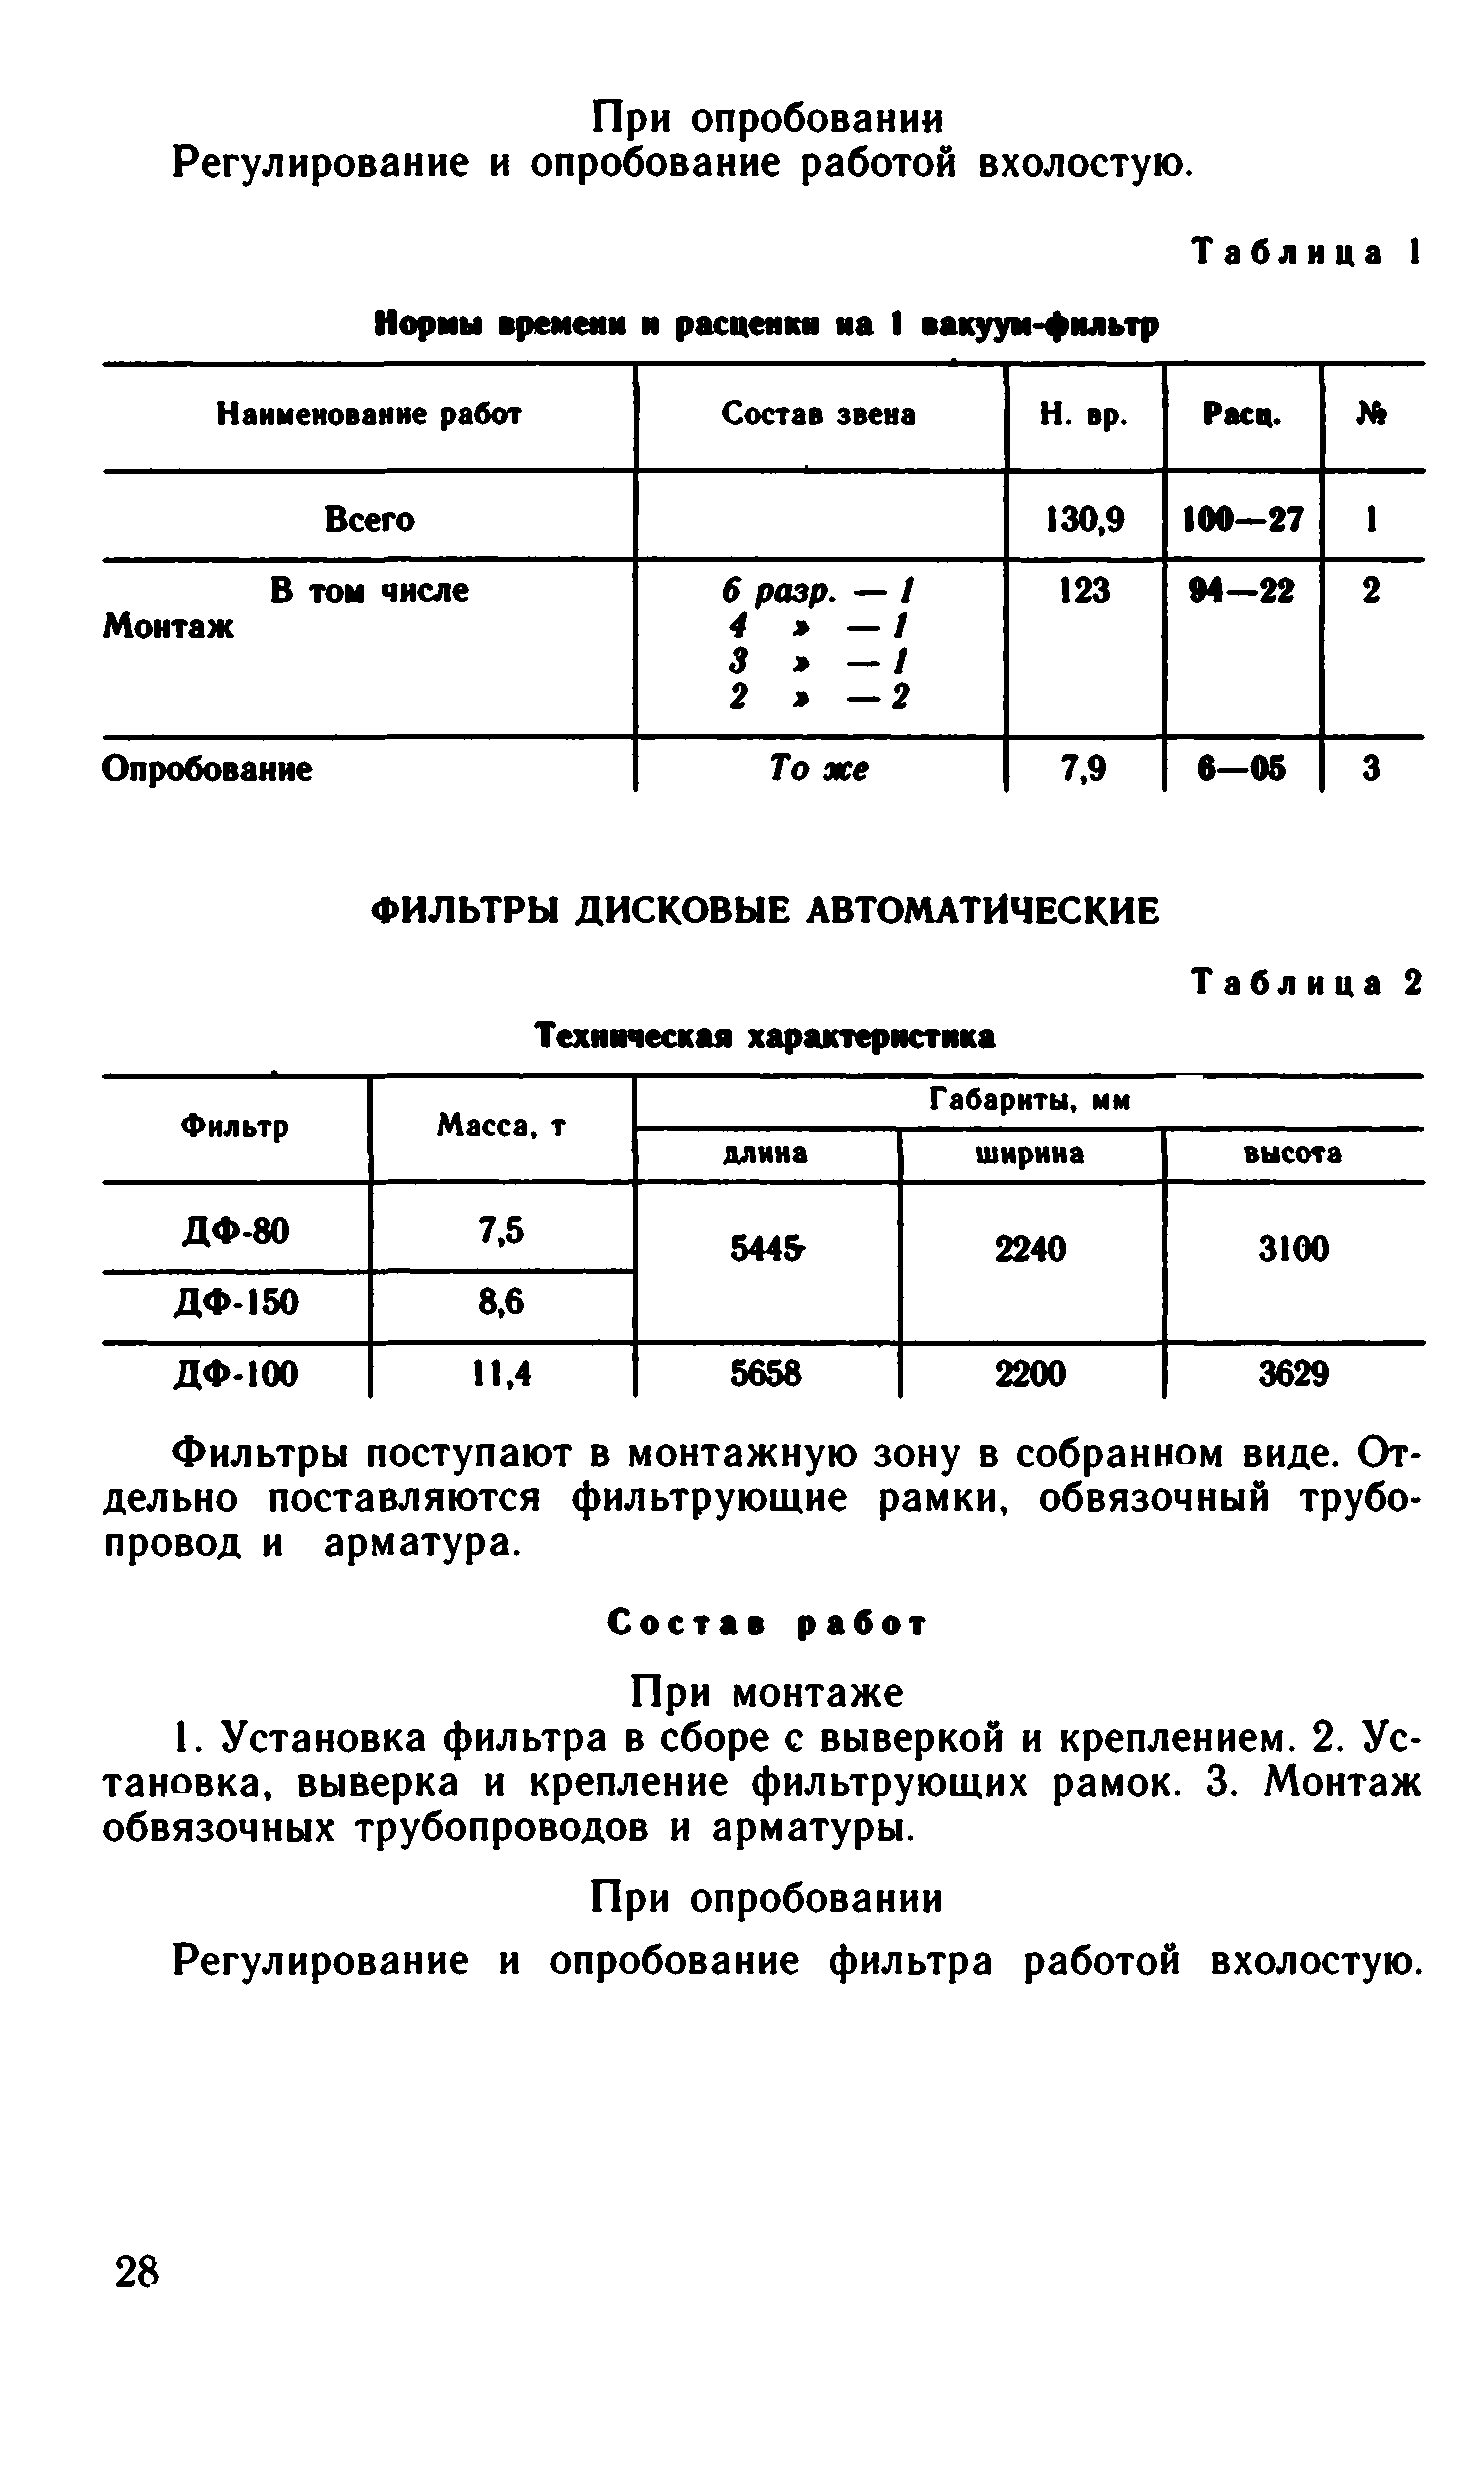 ВНиР В6-8